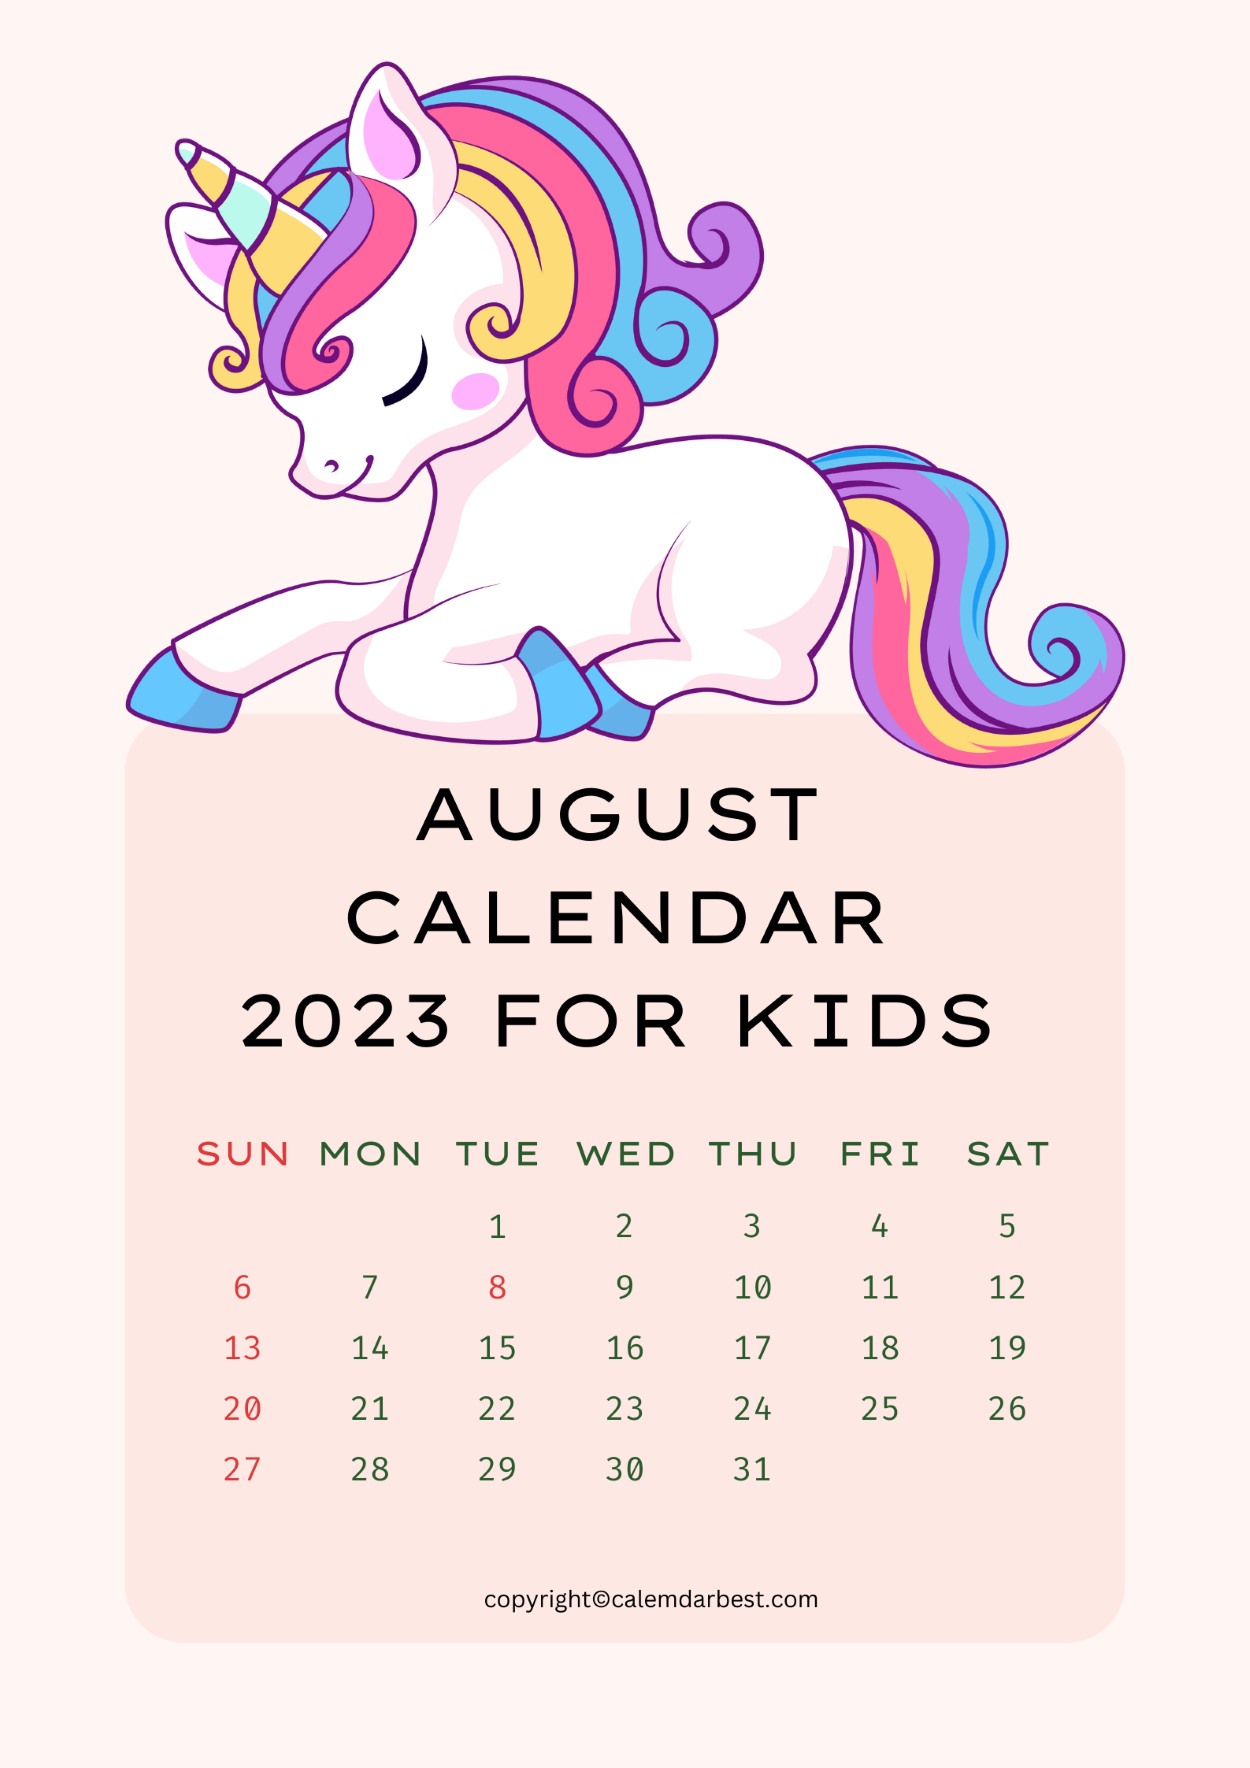 August 2023 Calendar for kids